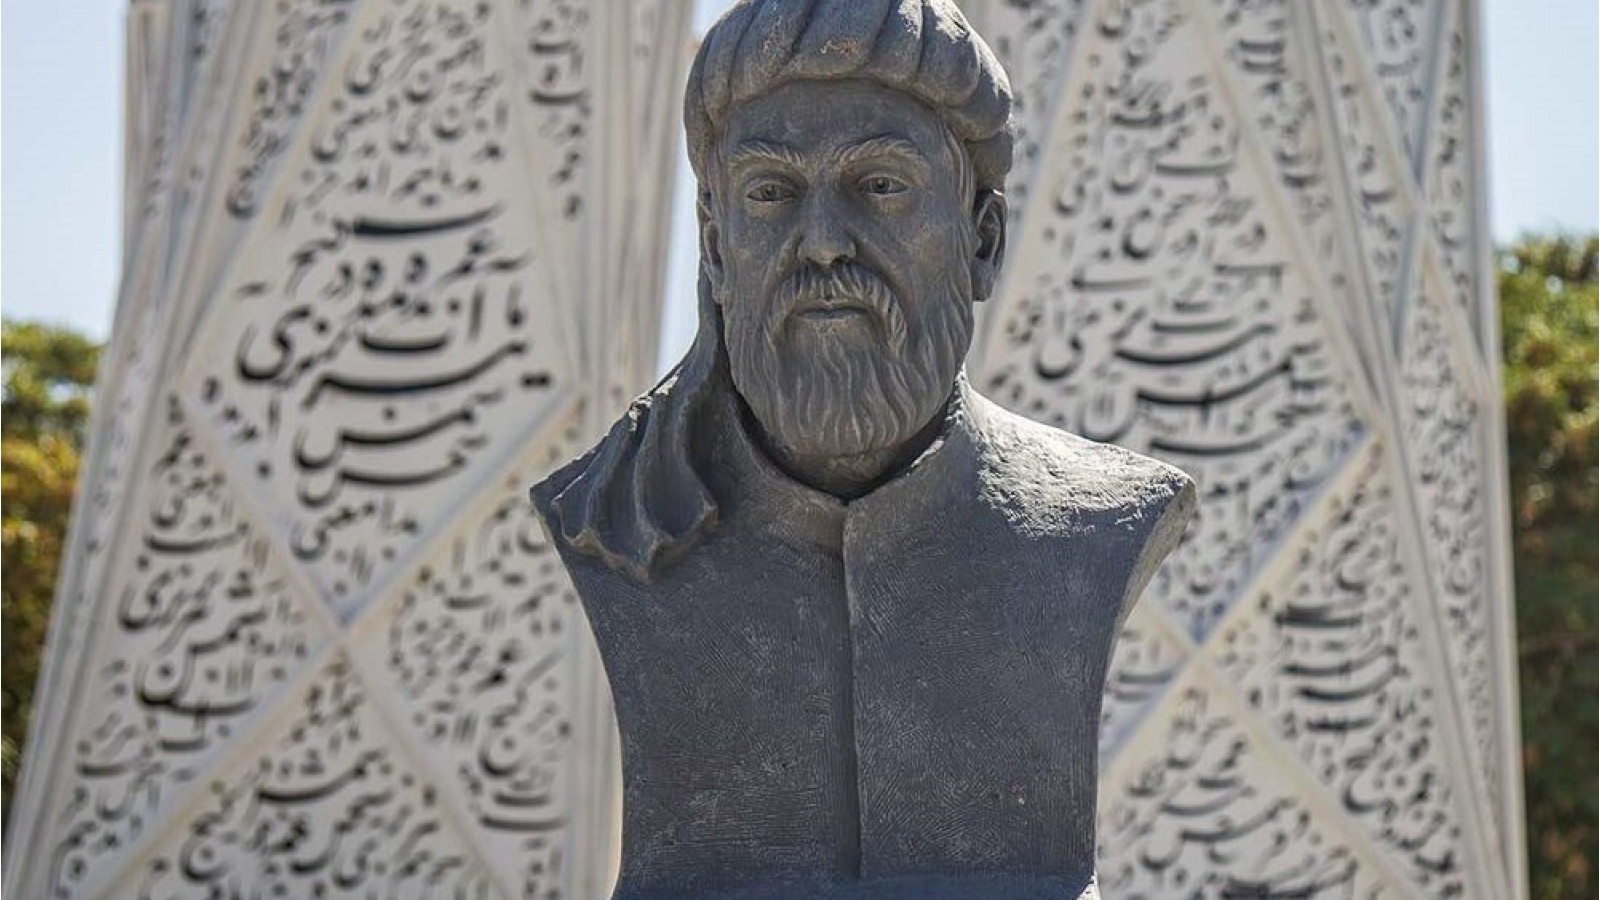 Shams Tabrizi (East Azerbaijan)